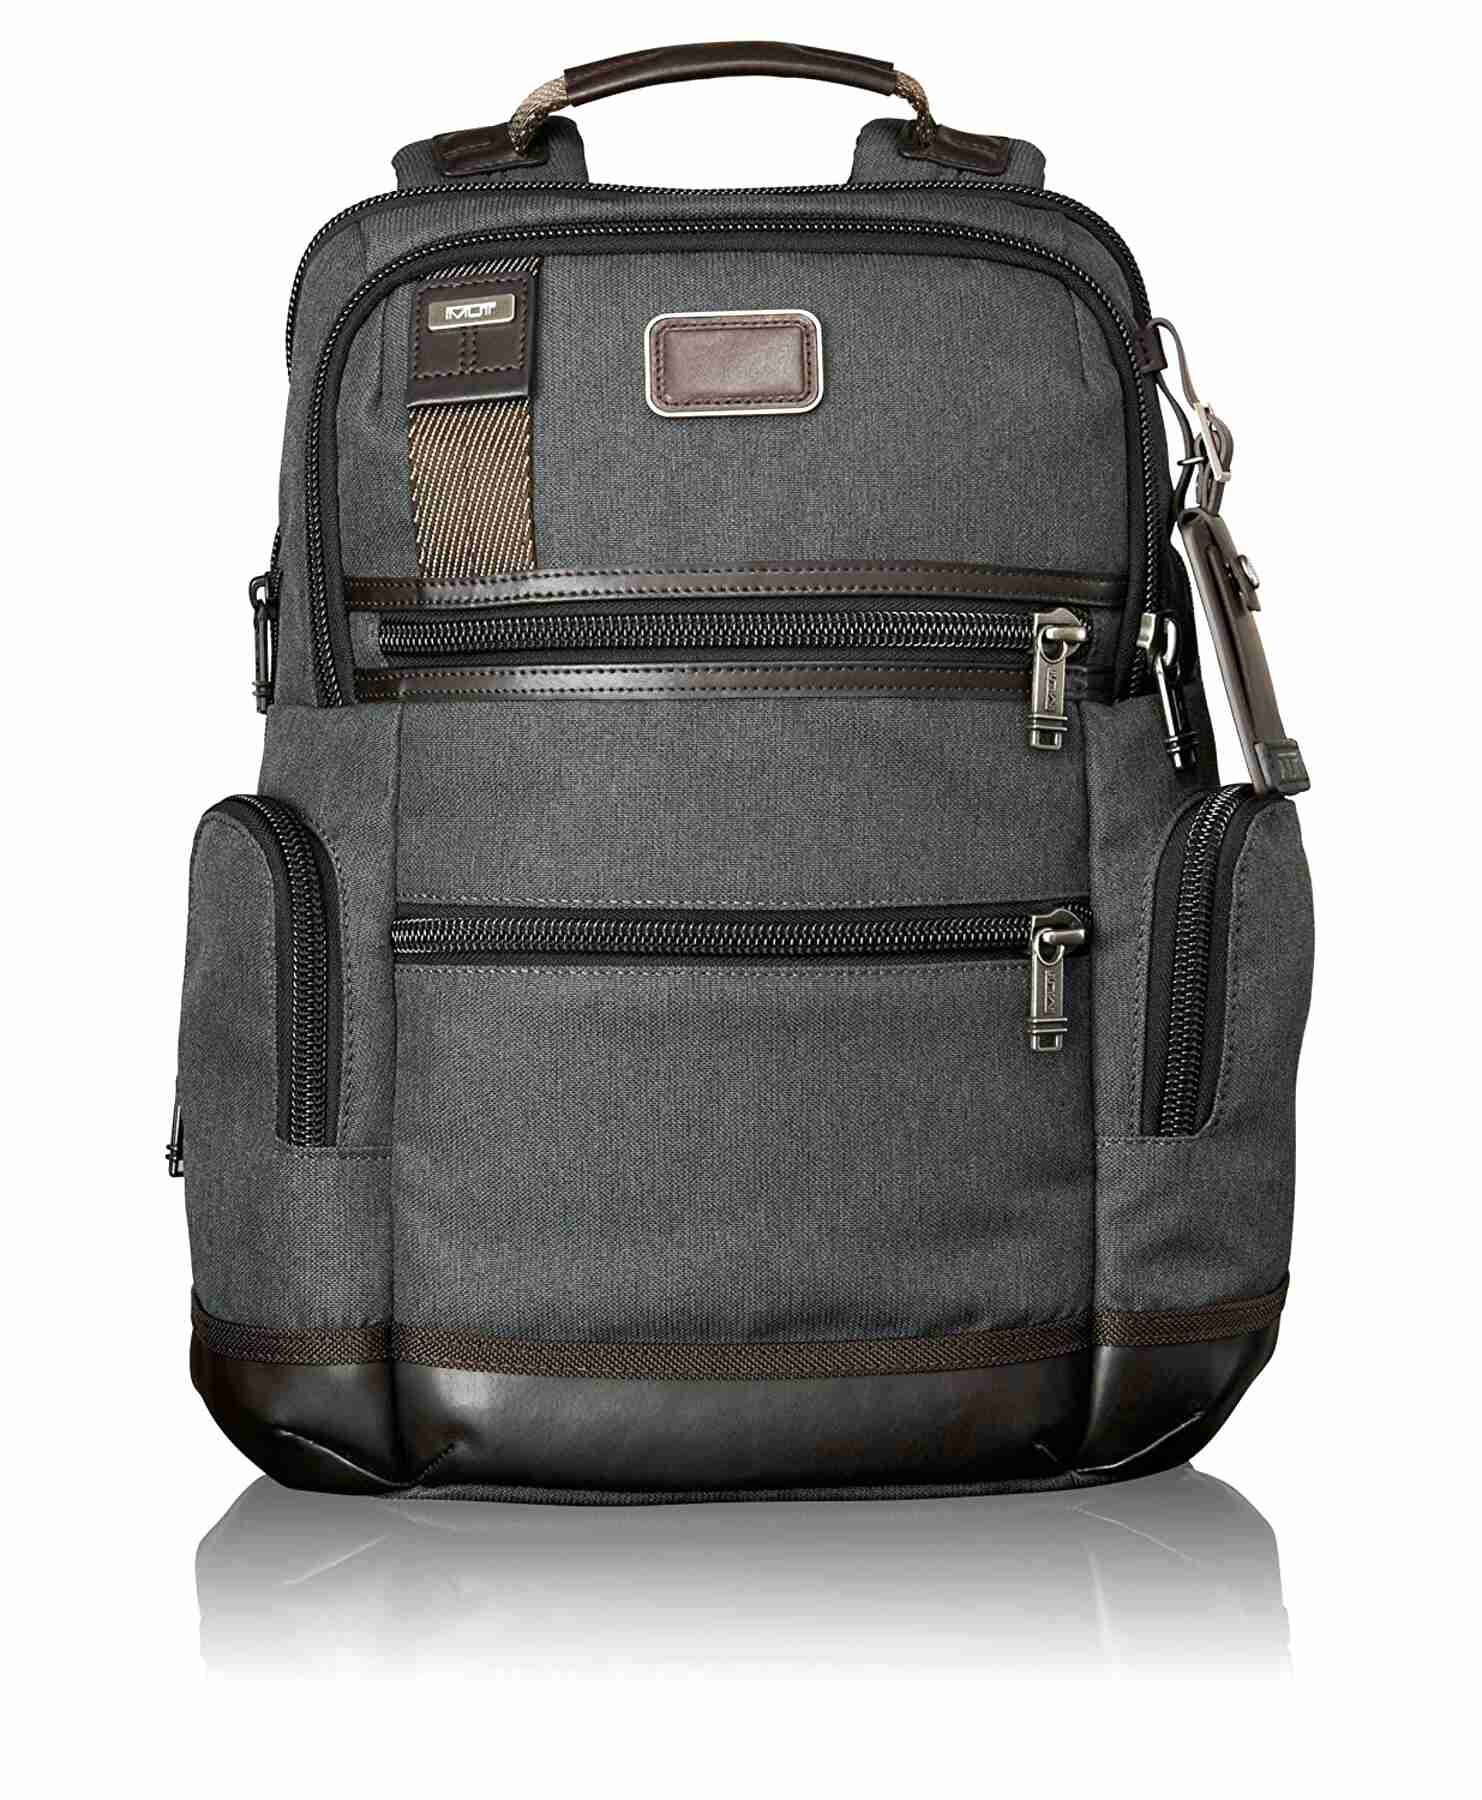 Tumi Backpack for sale in UK | 51 used Tumi Backpacks